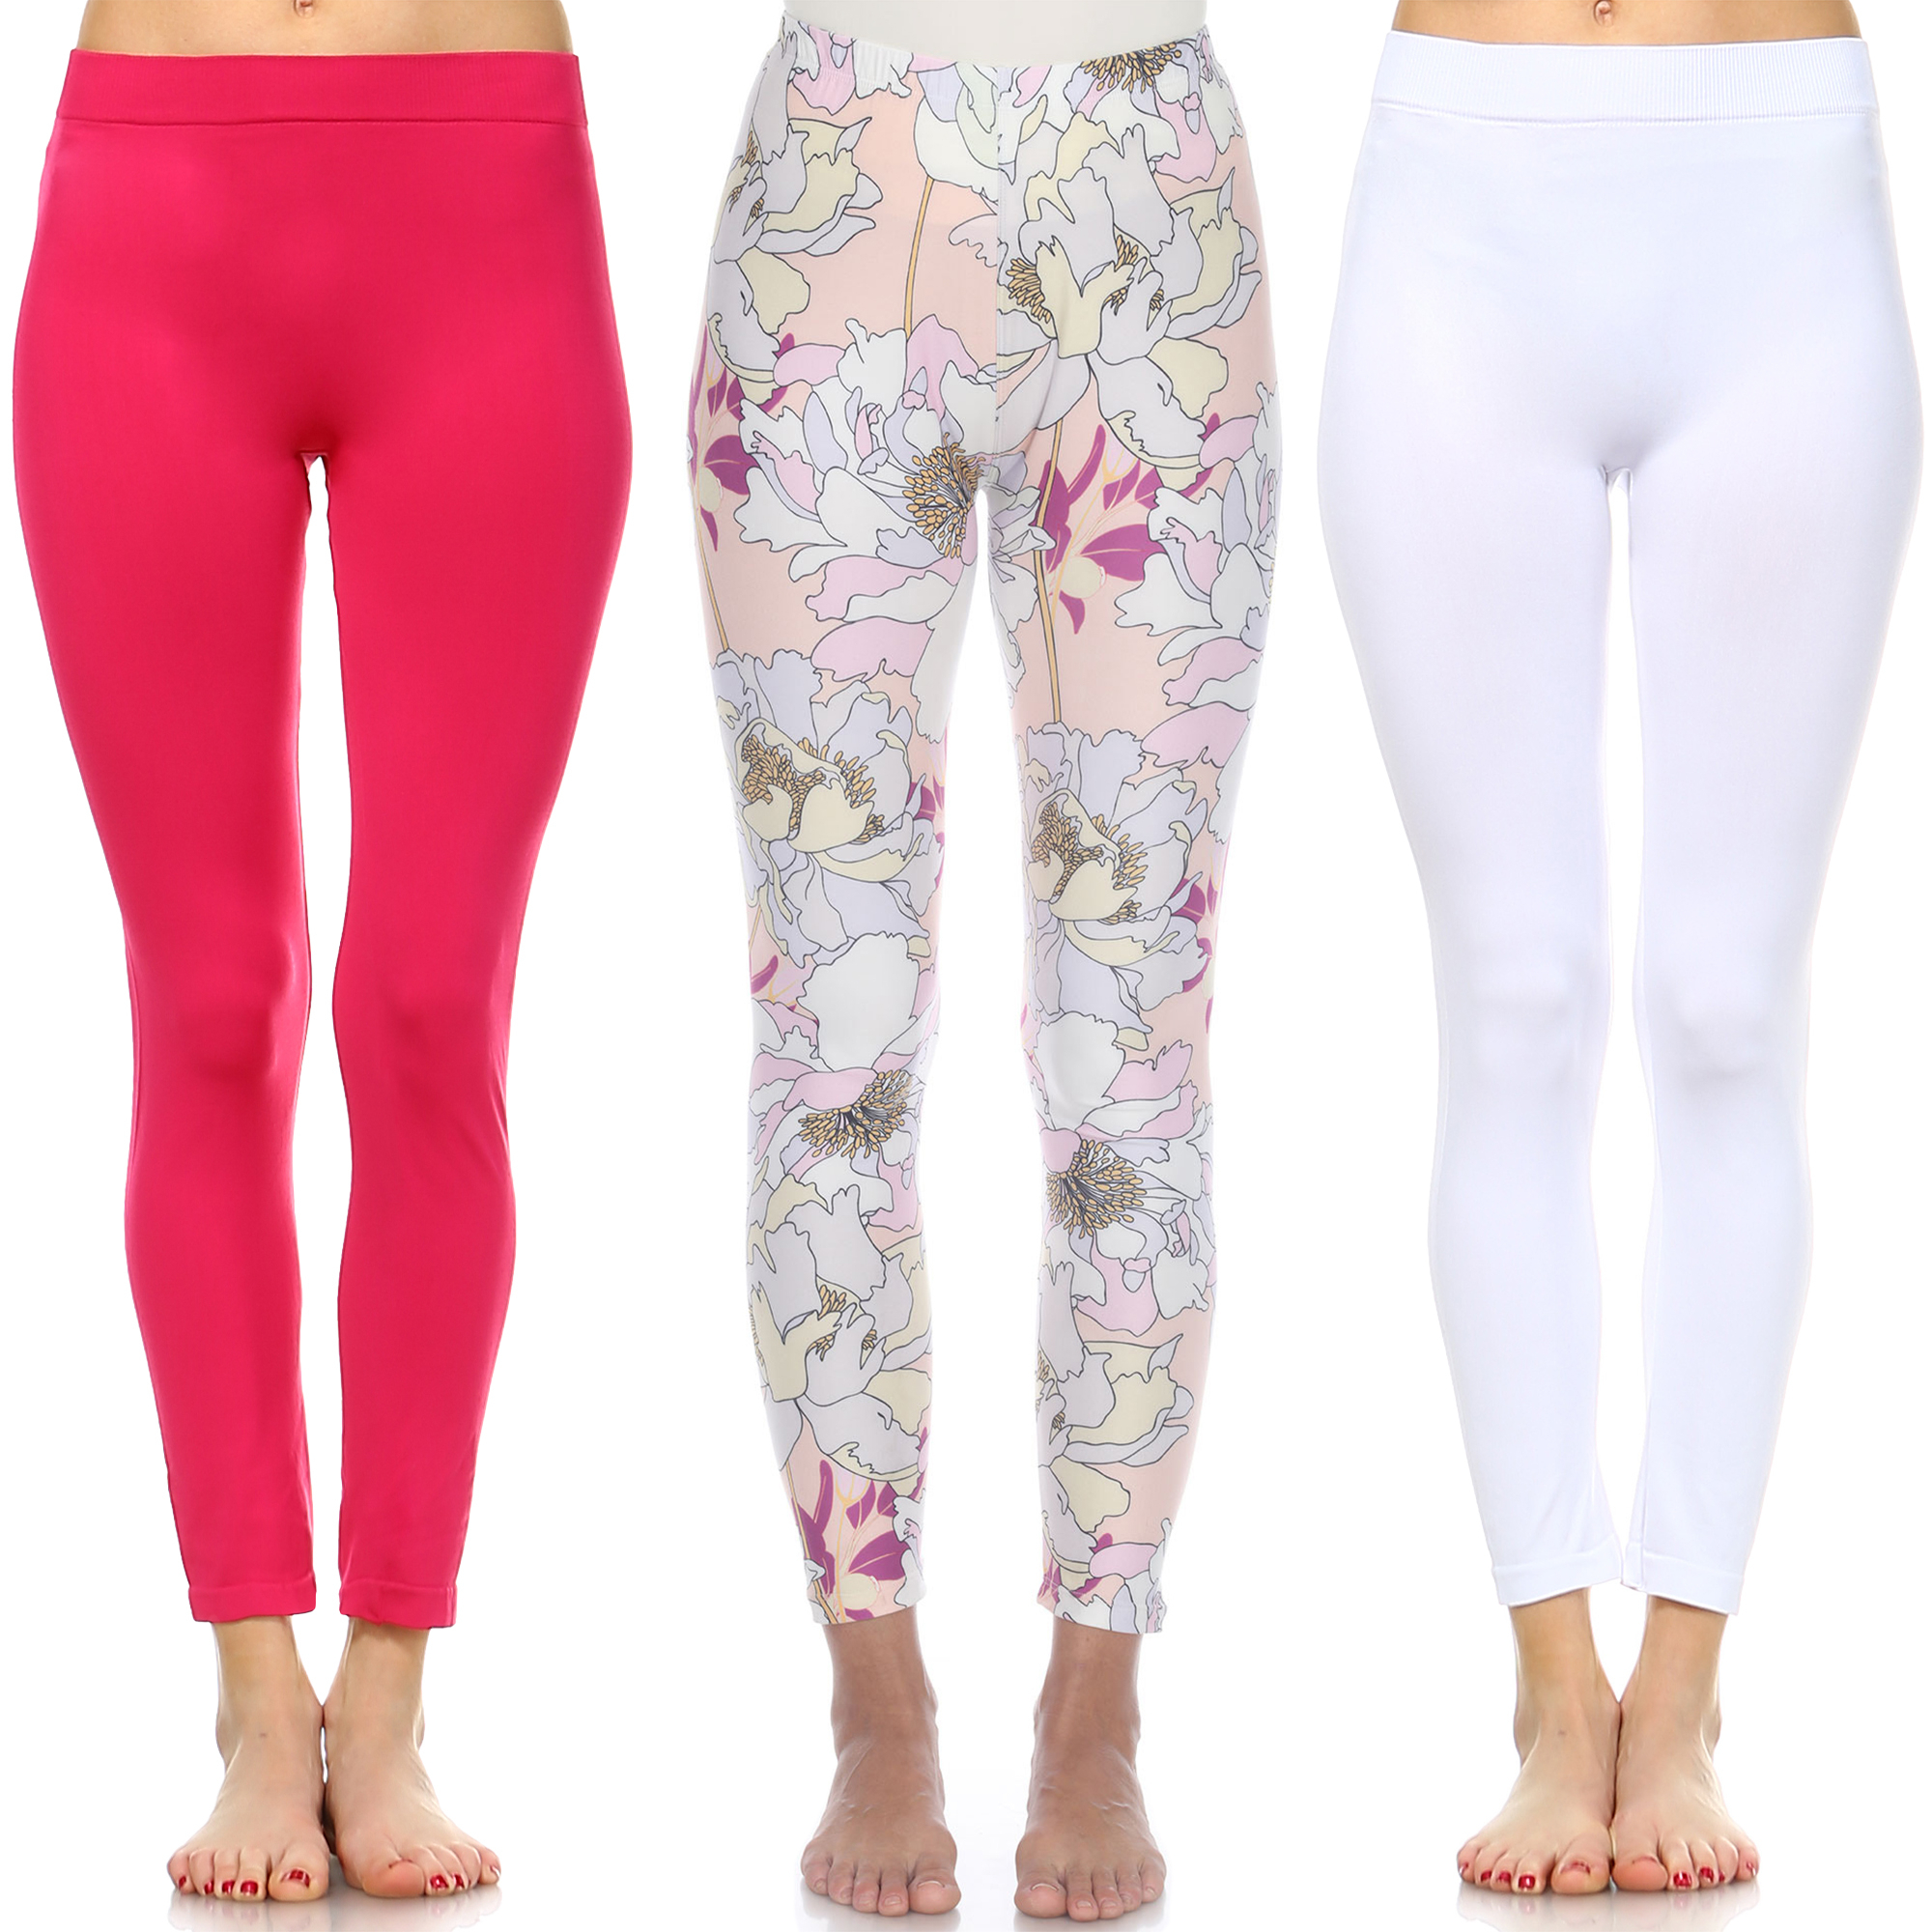 White Mark Womenâs Pack Of 3 Leggings - White, Fuchsia, Coral Pink Flower, One Size (Missy)